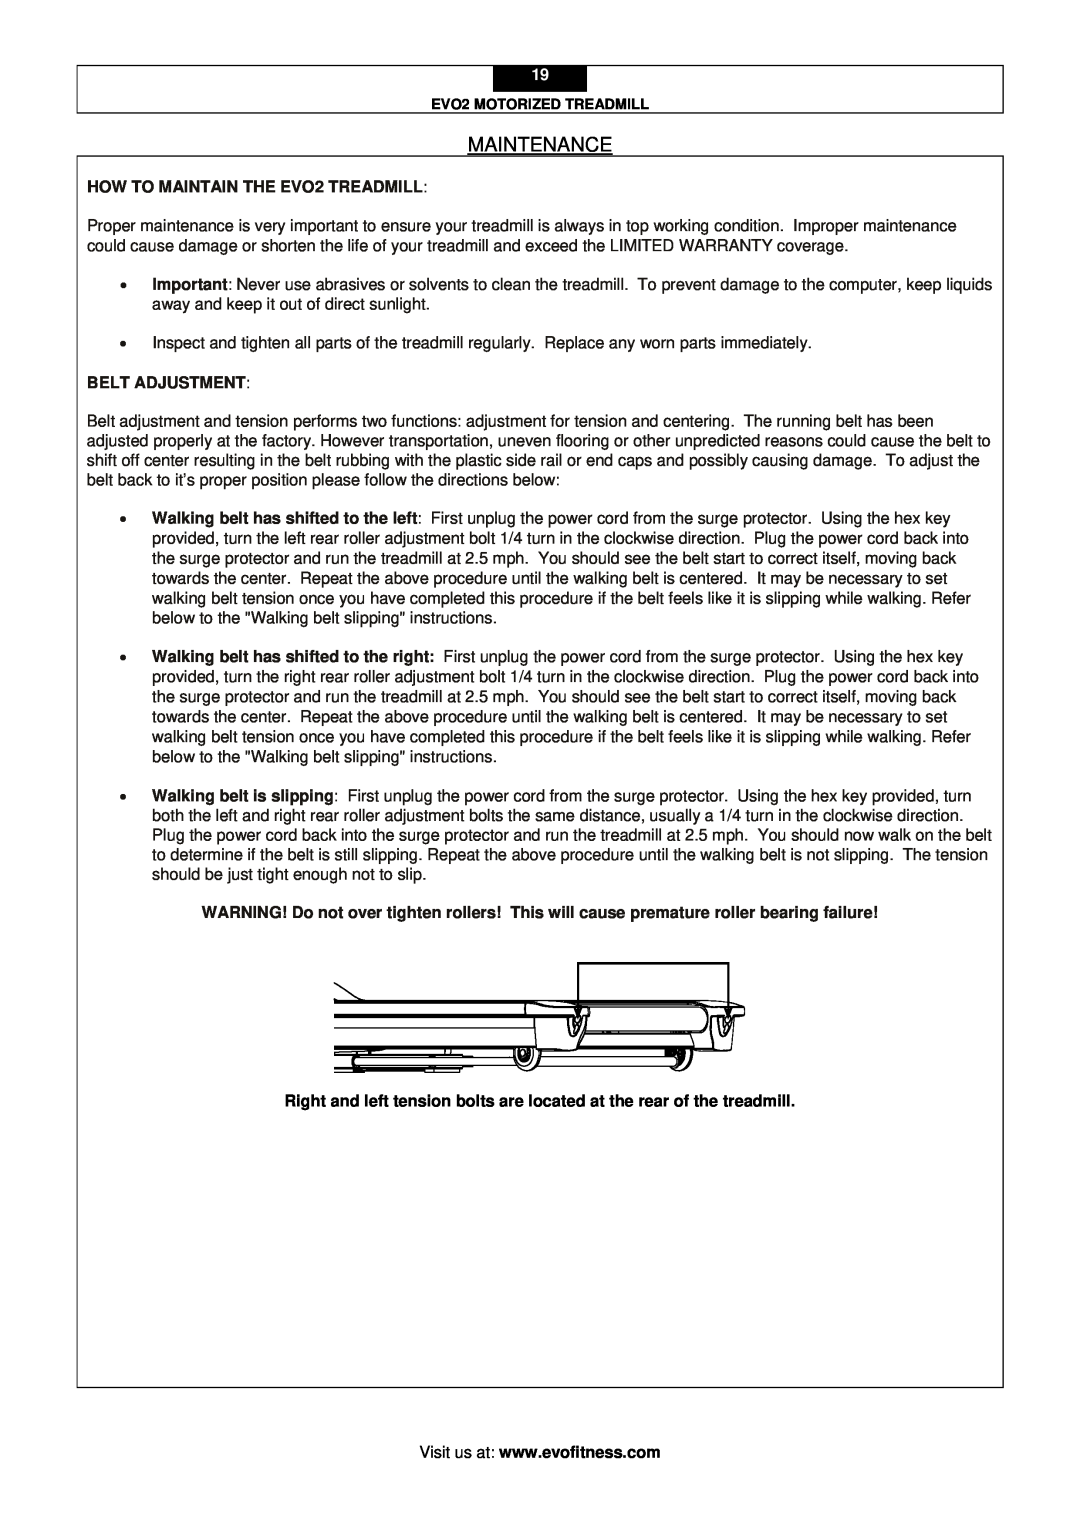 Evo Fitness user manual Maintenance, HOW TO MAINTAIN THE EVO2 TREADMILL, Belt Adjustment 